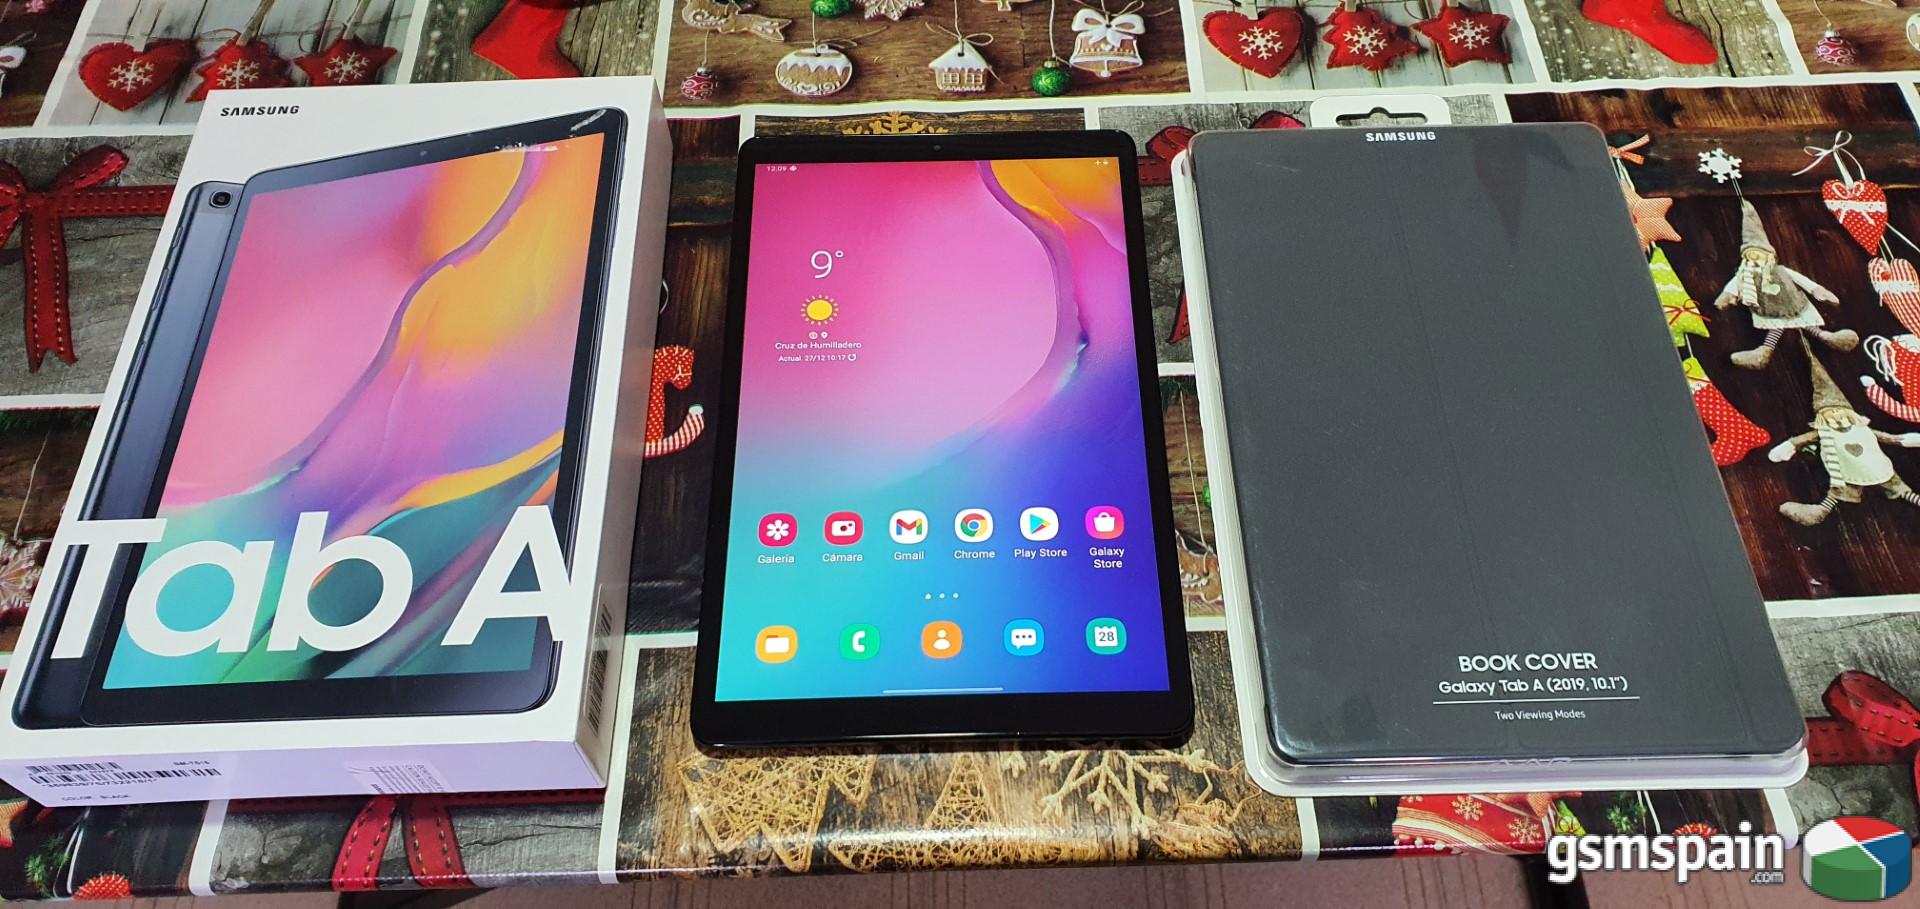 [VENDO] Tablet Samsung Tab A 10.1 2019 32GB Wifi + LTE 4G + Funda Original Samsung........